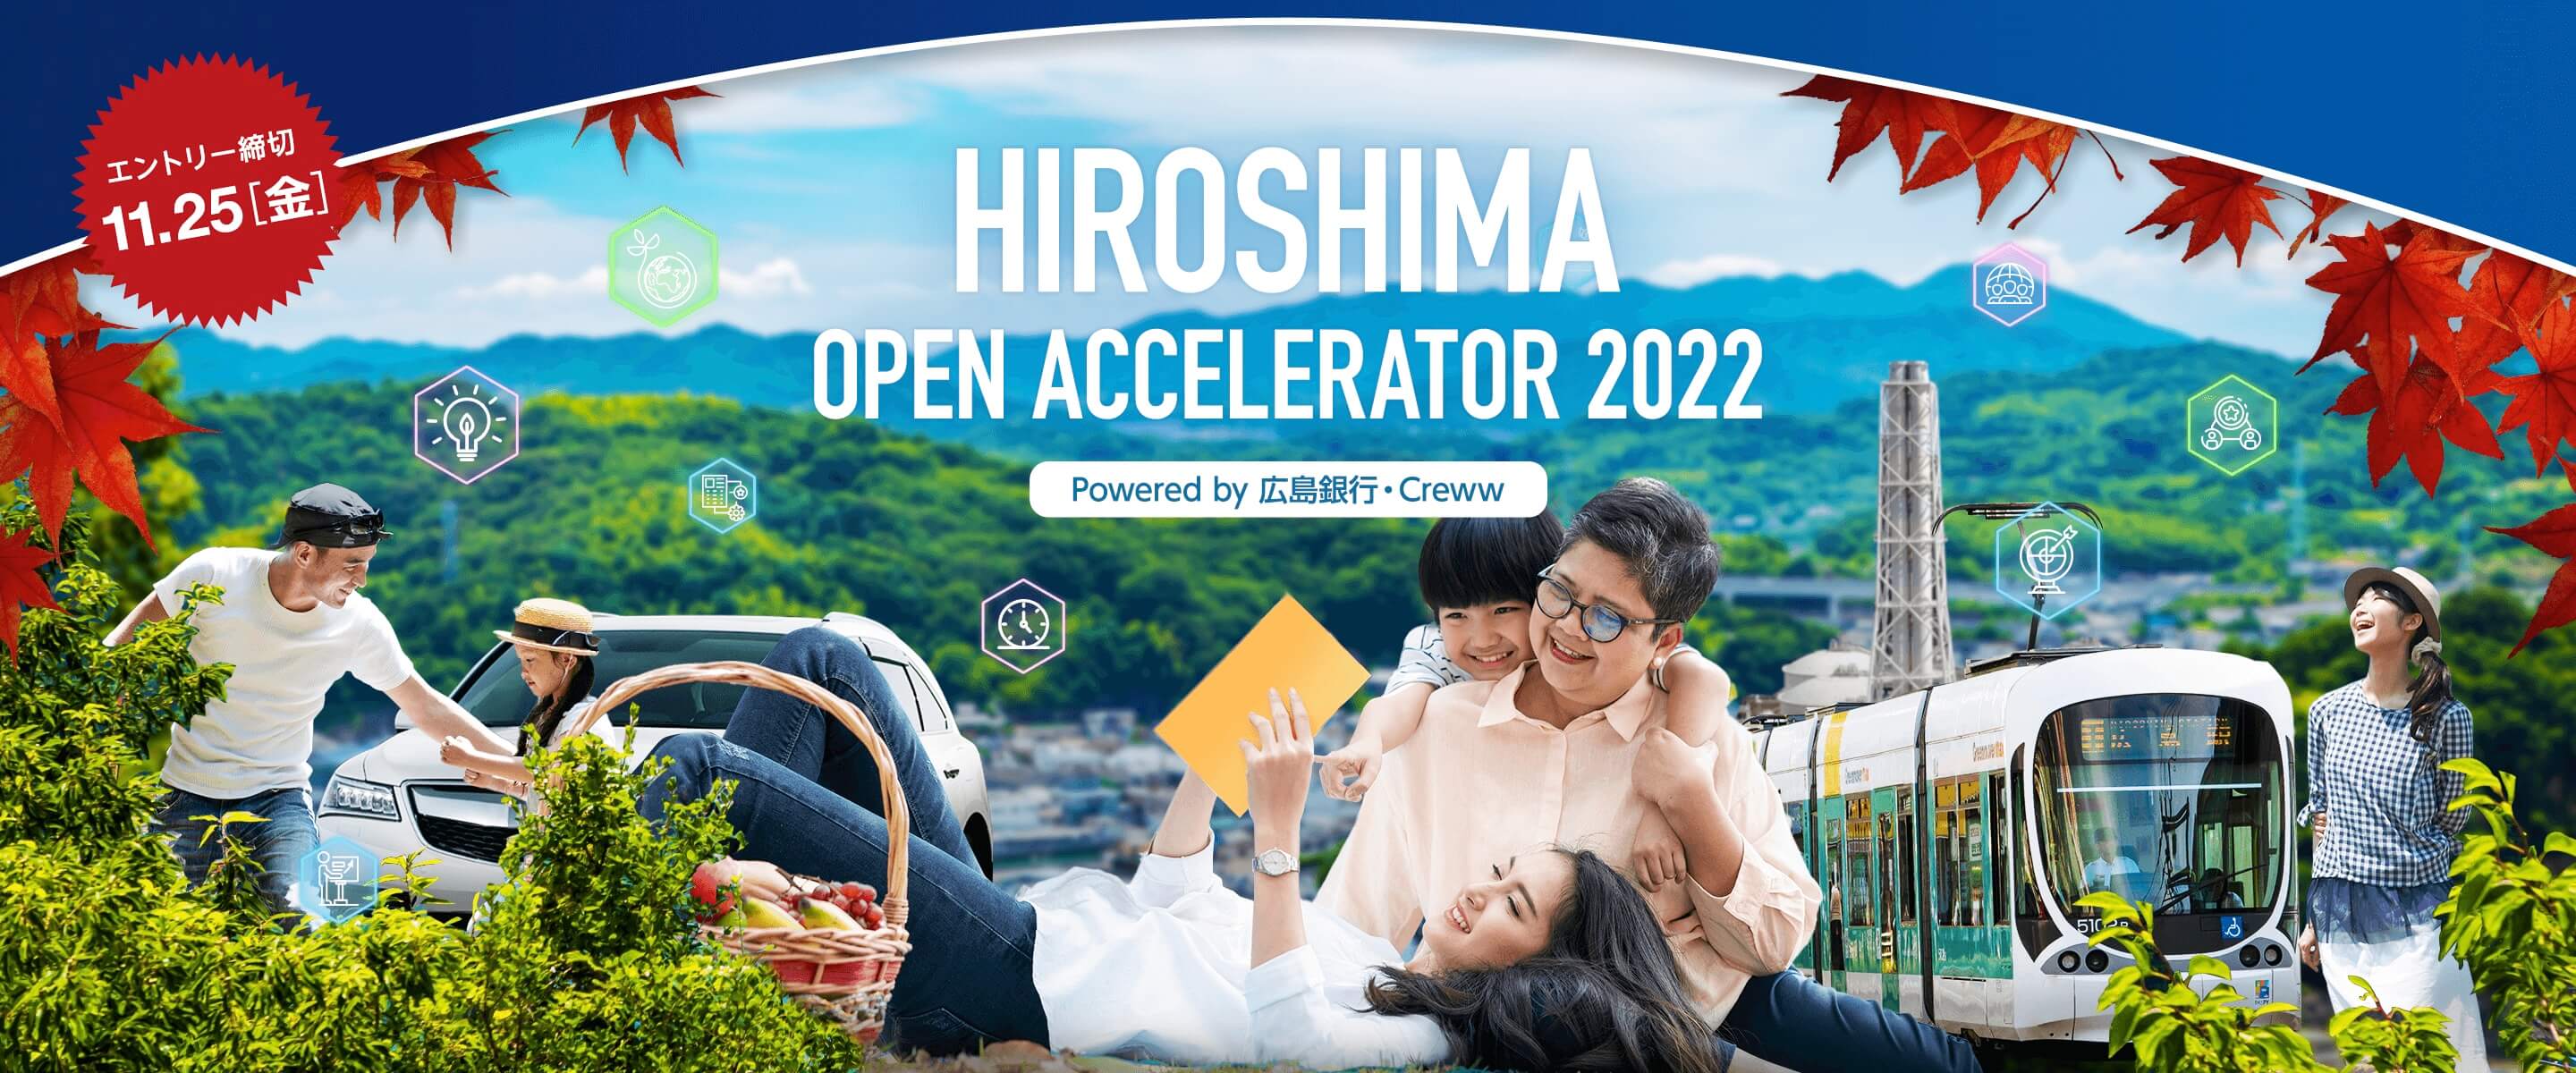 HIROSHIMA OPEN ACCELERATOR 2022